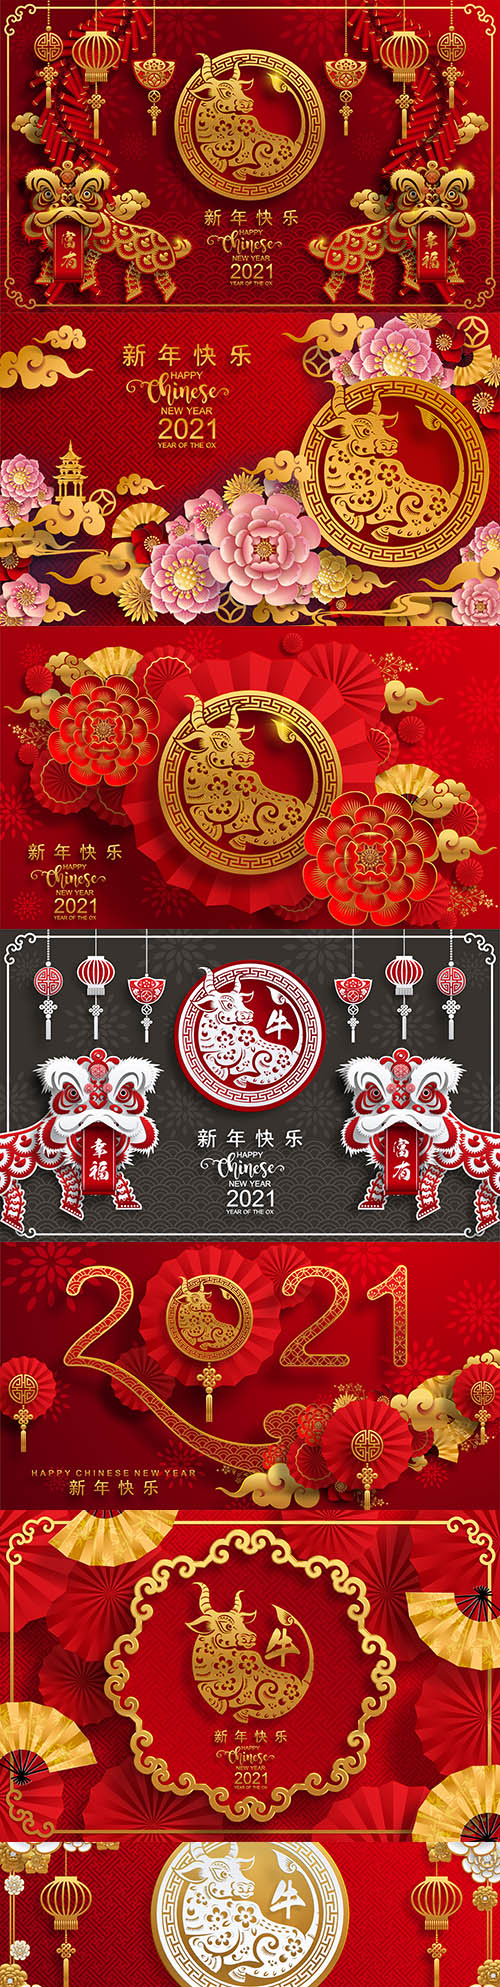 Metal Bull 2021 New Year on Chinese calendar
